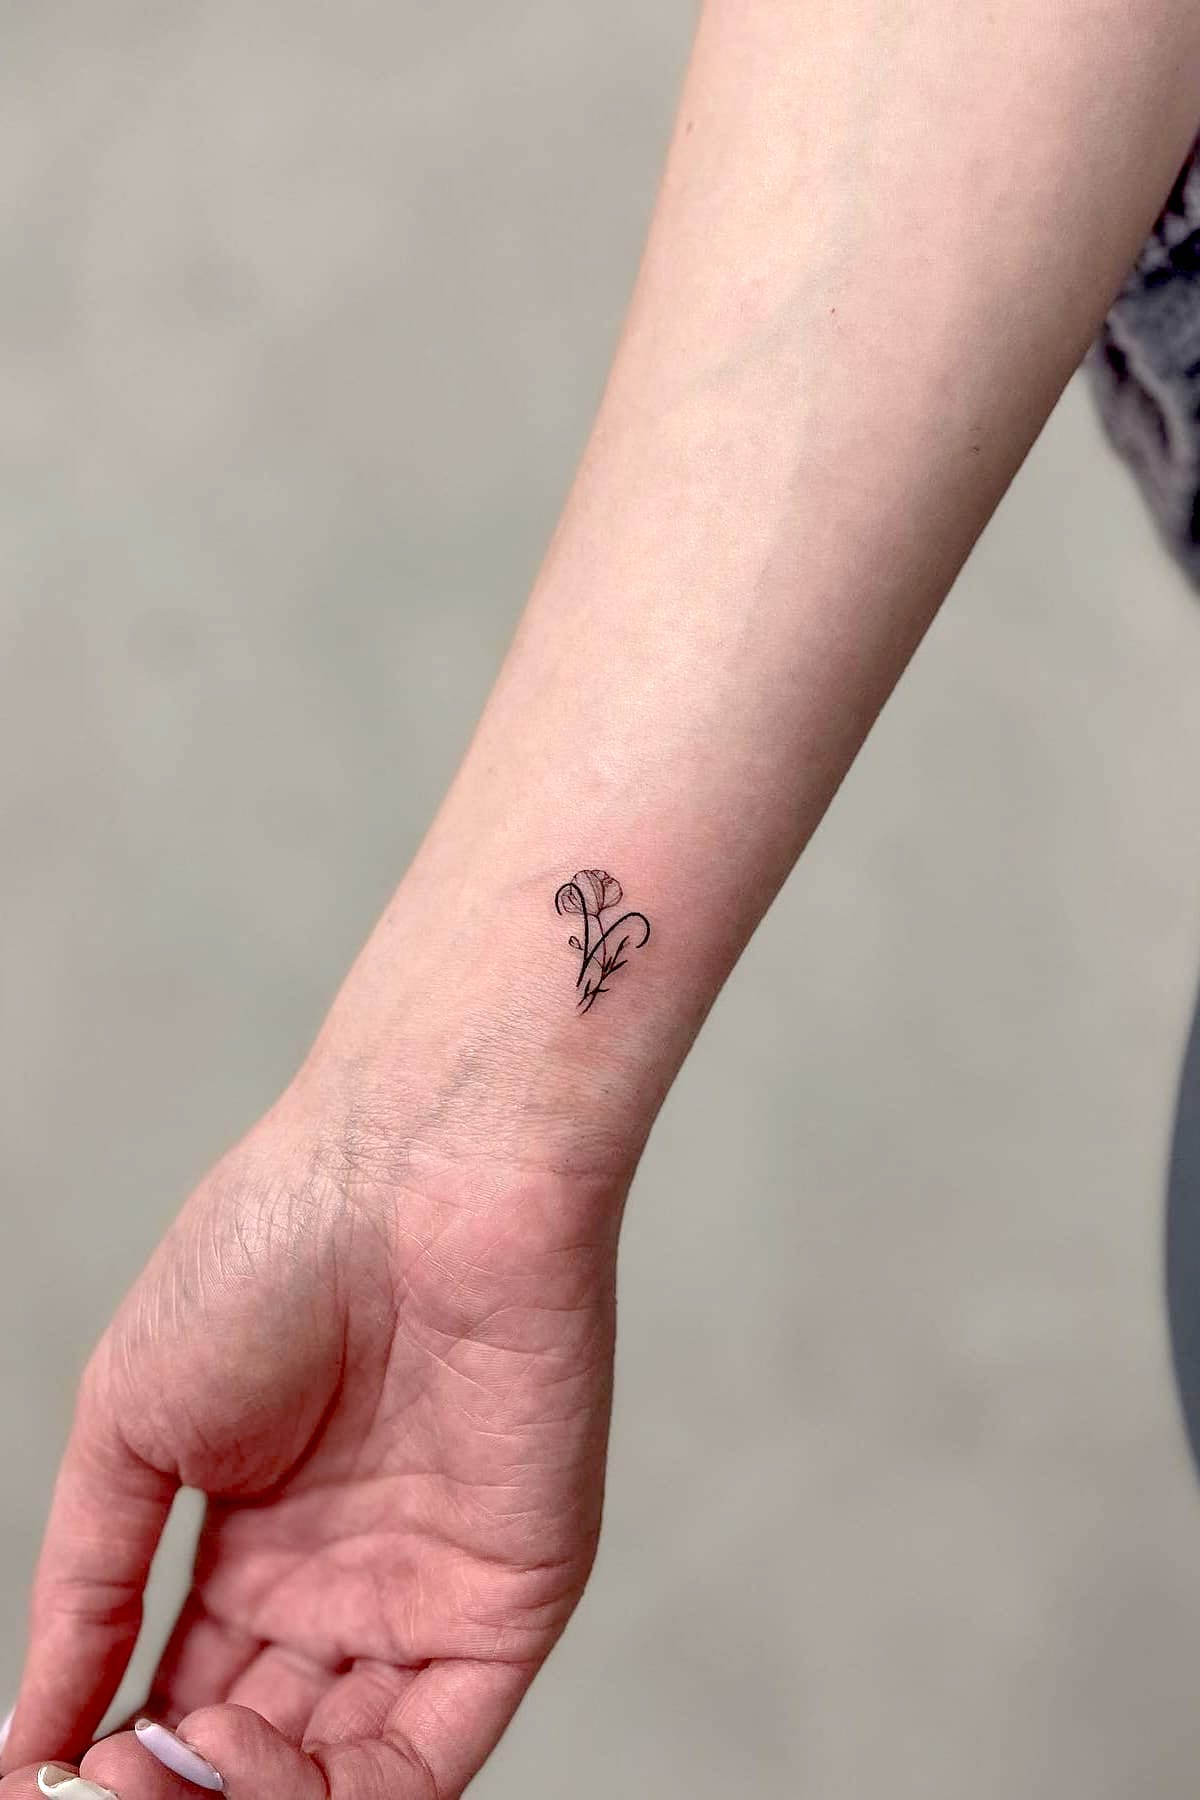 Aries Tattoo on Wrist